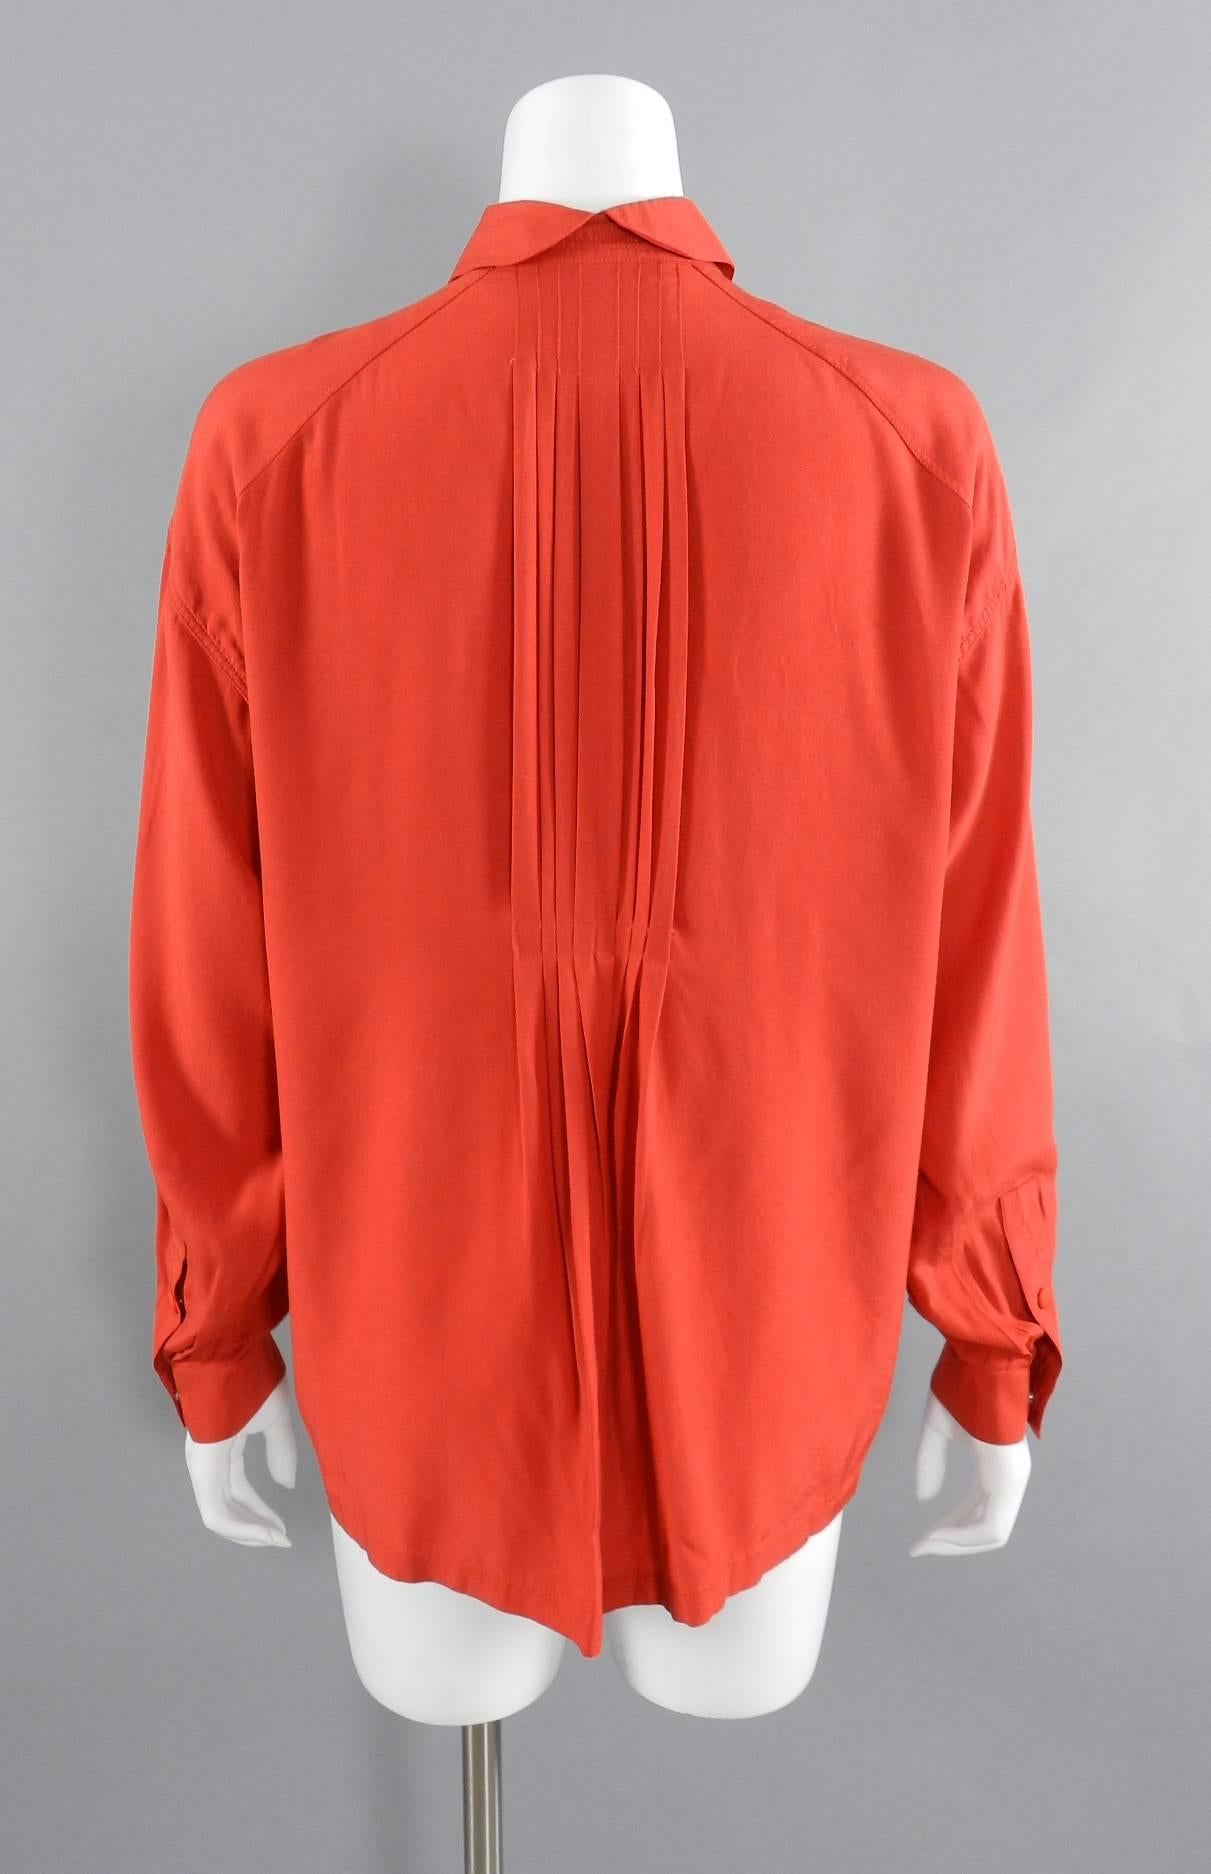 Red Claude Montana 1980's Orange Shirt with String Collar